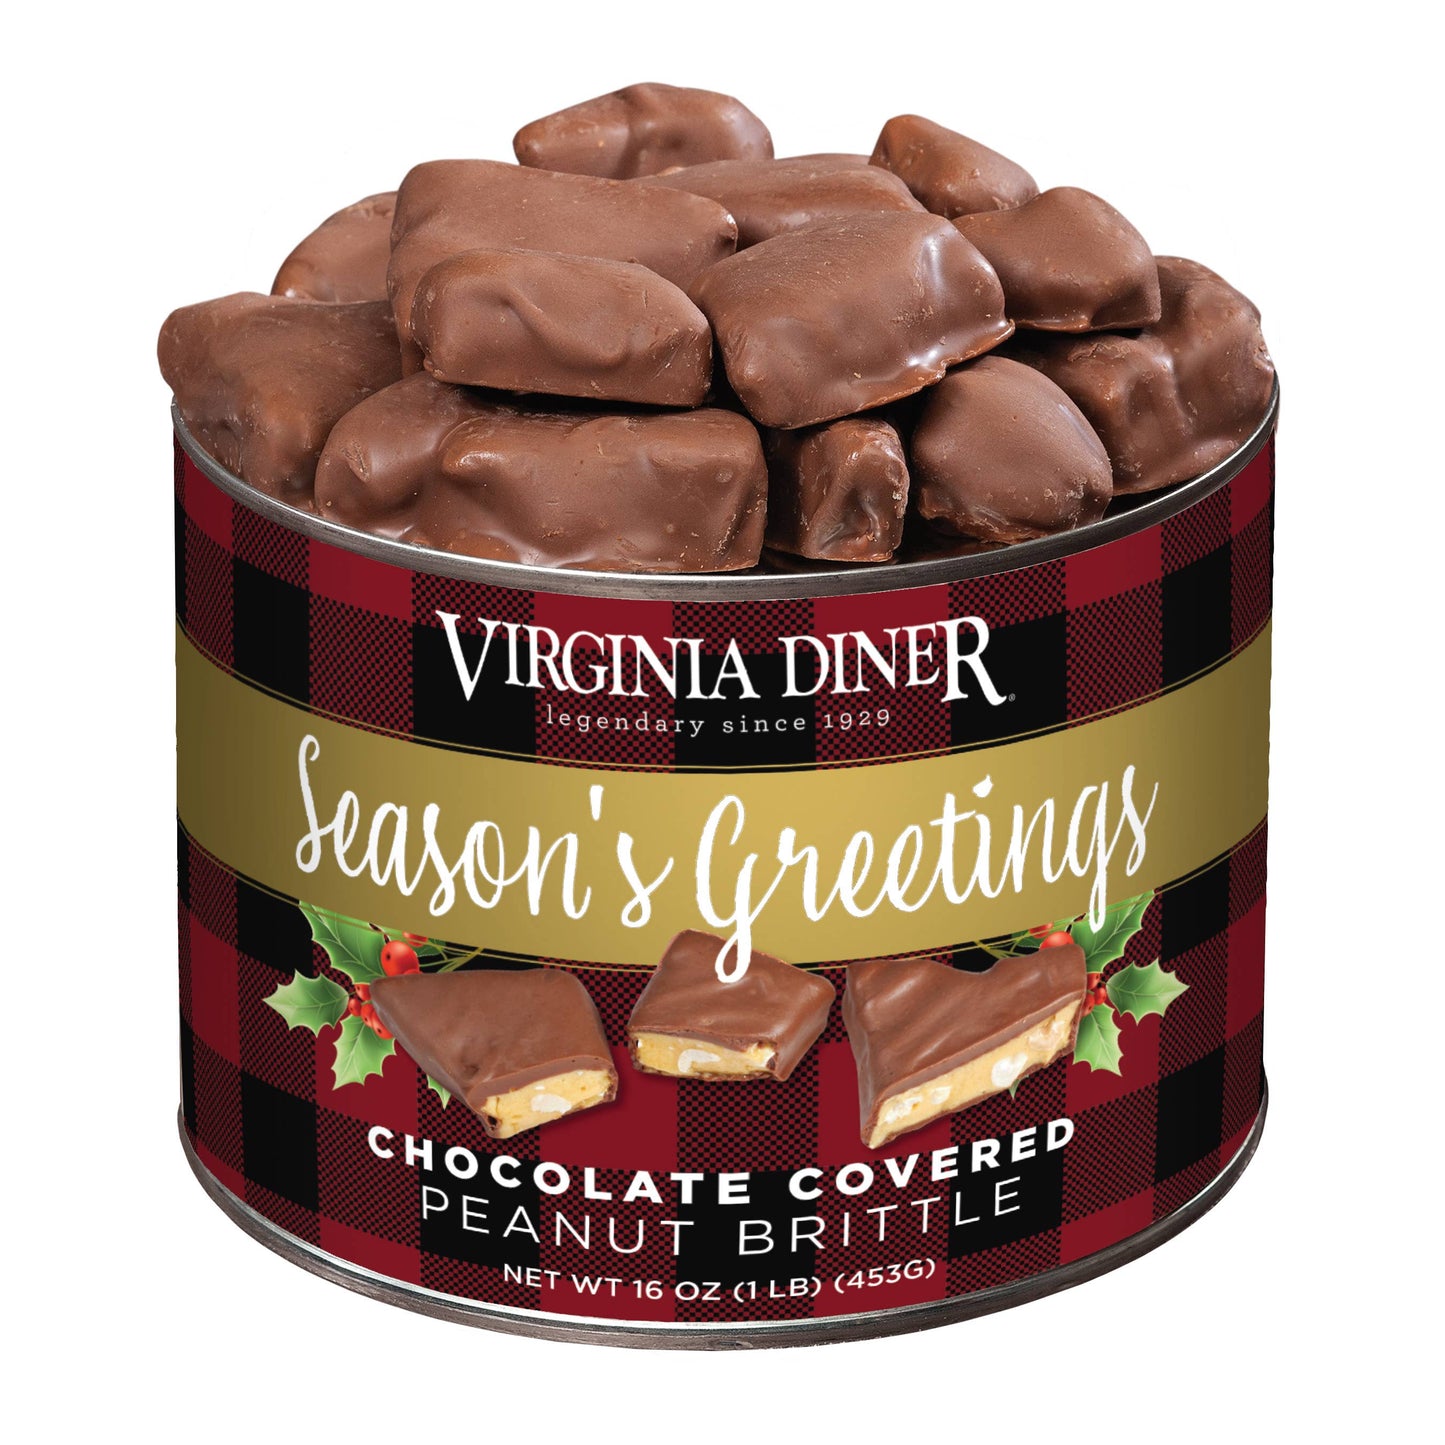 VIRGINIA DINER 16oz. Chocolate Covered Peanut Brittle